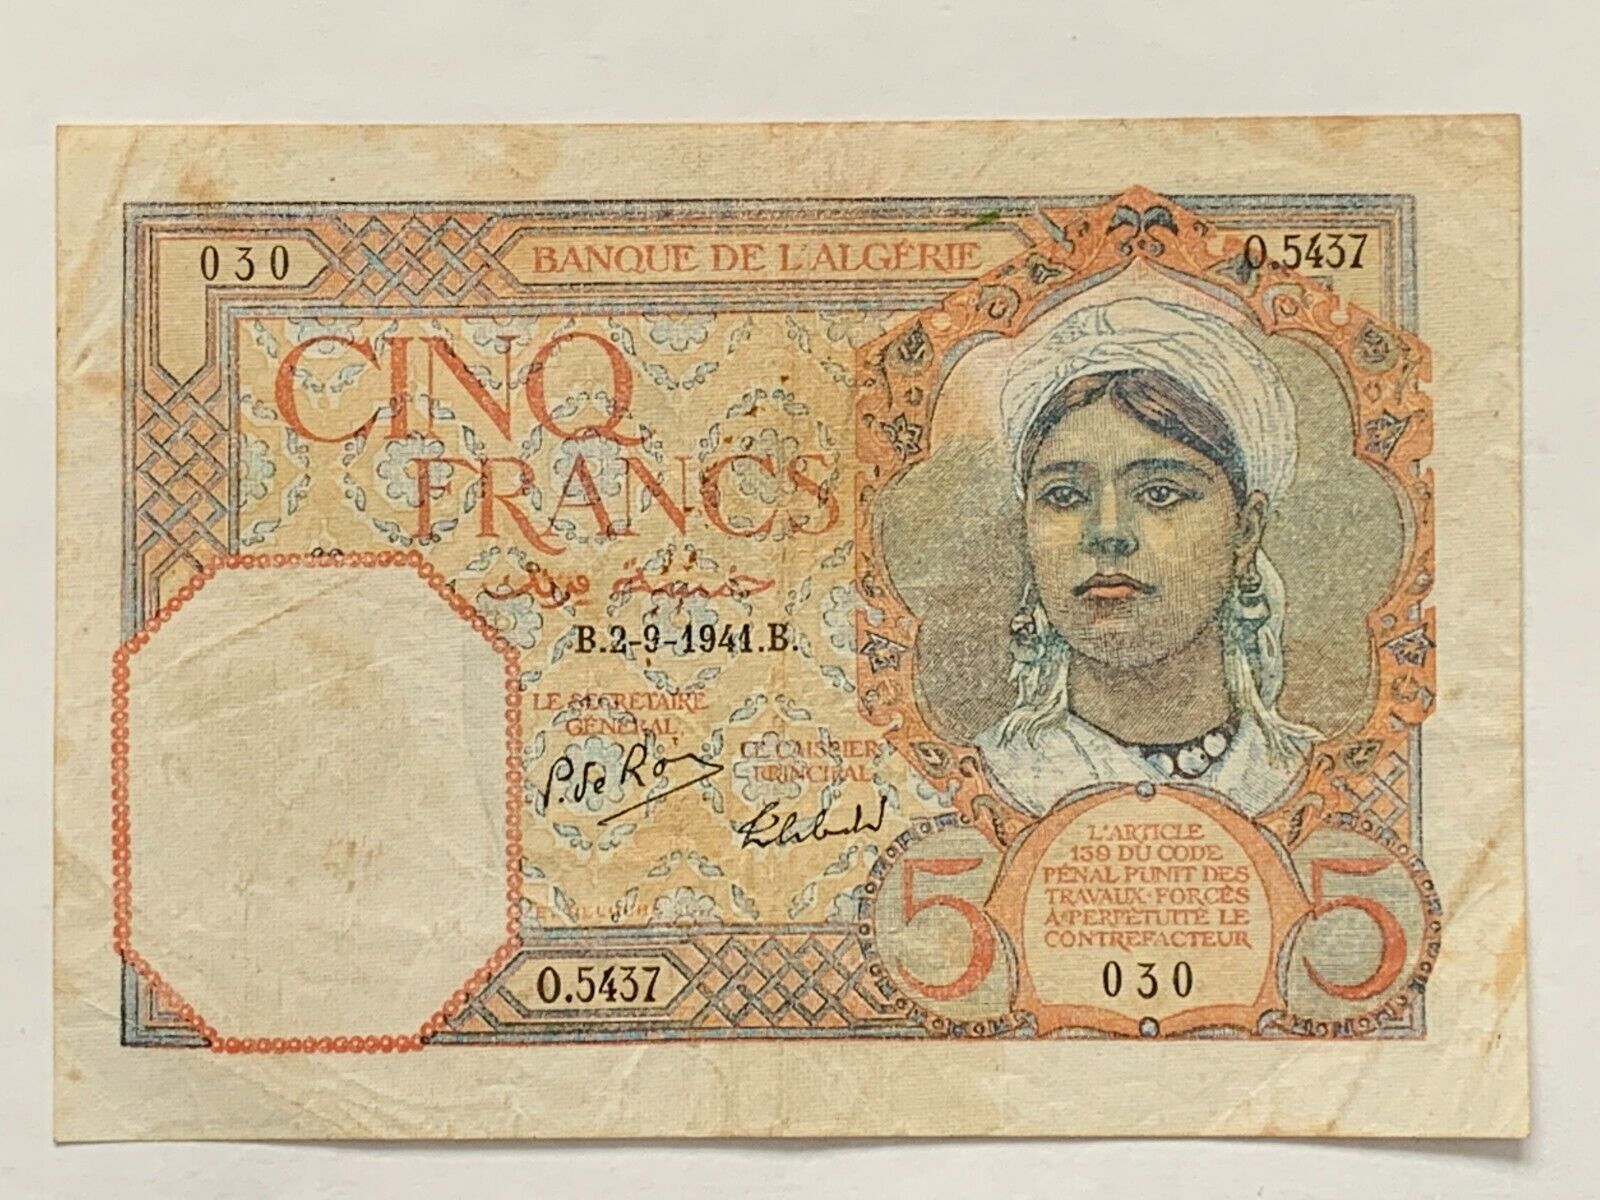 Algeria ~ 1941 ~ 5 Francs Note ~ Banque de l’Algerie ~ P-77